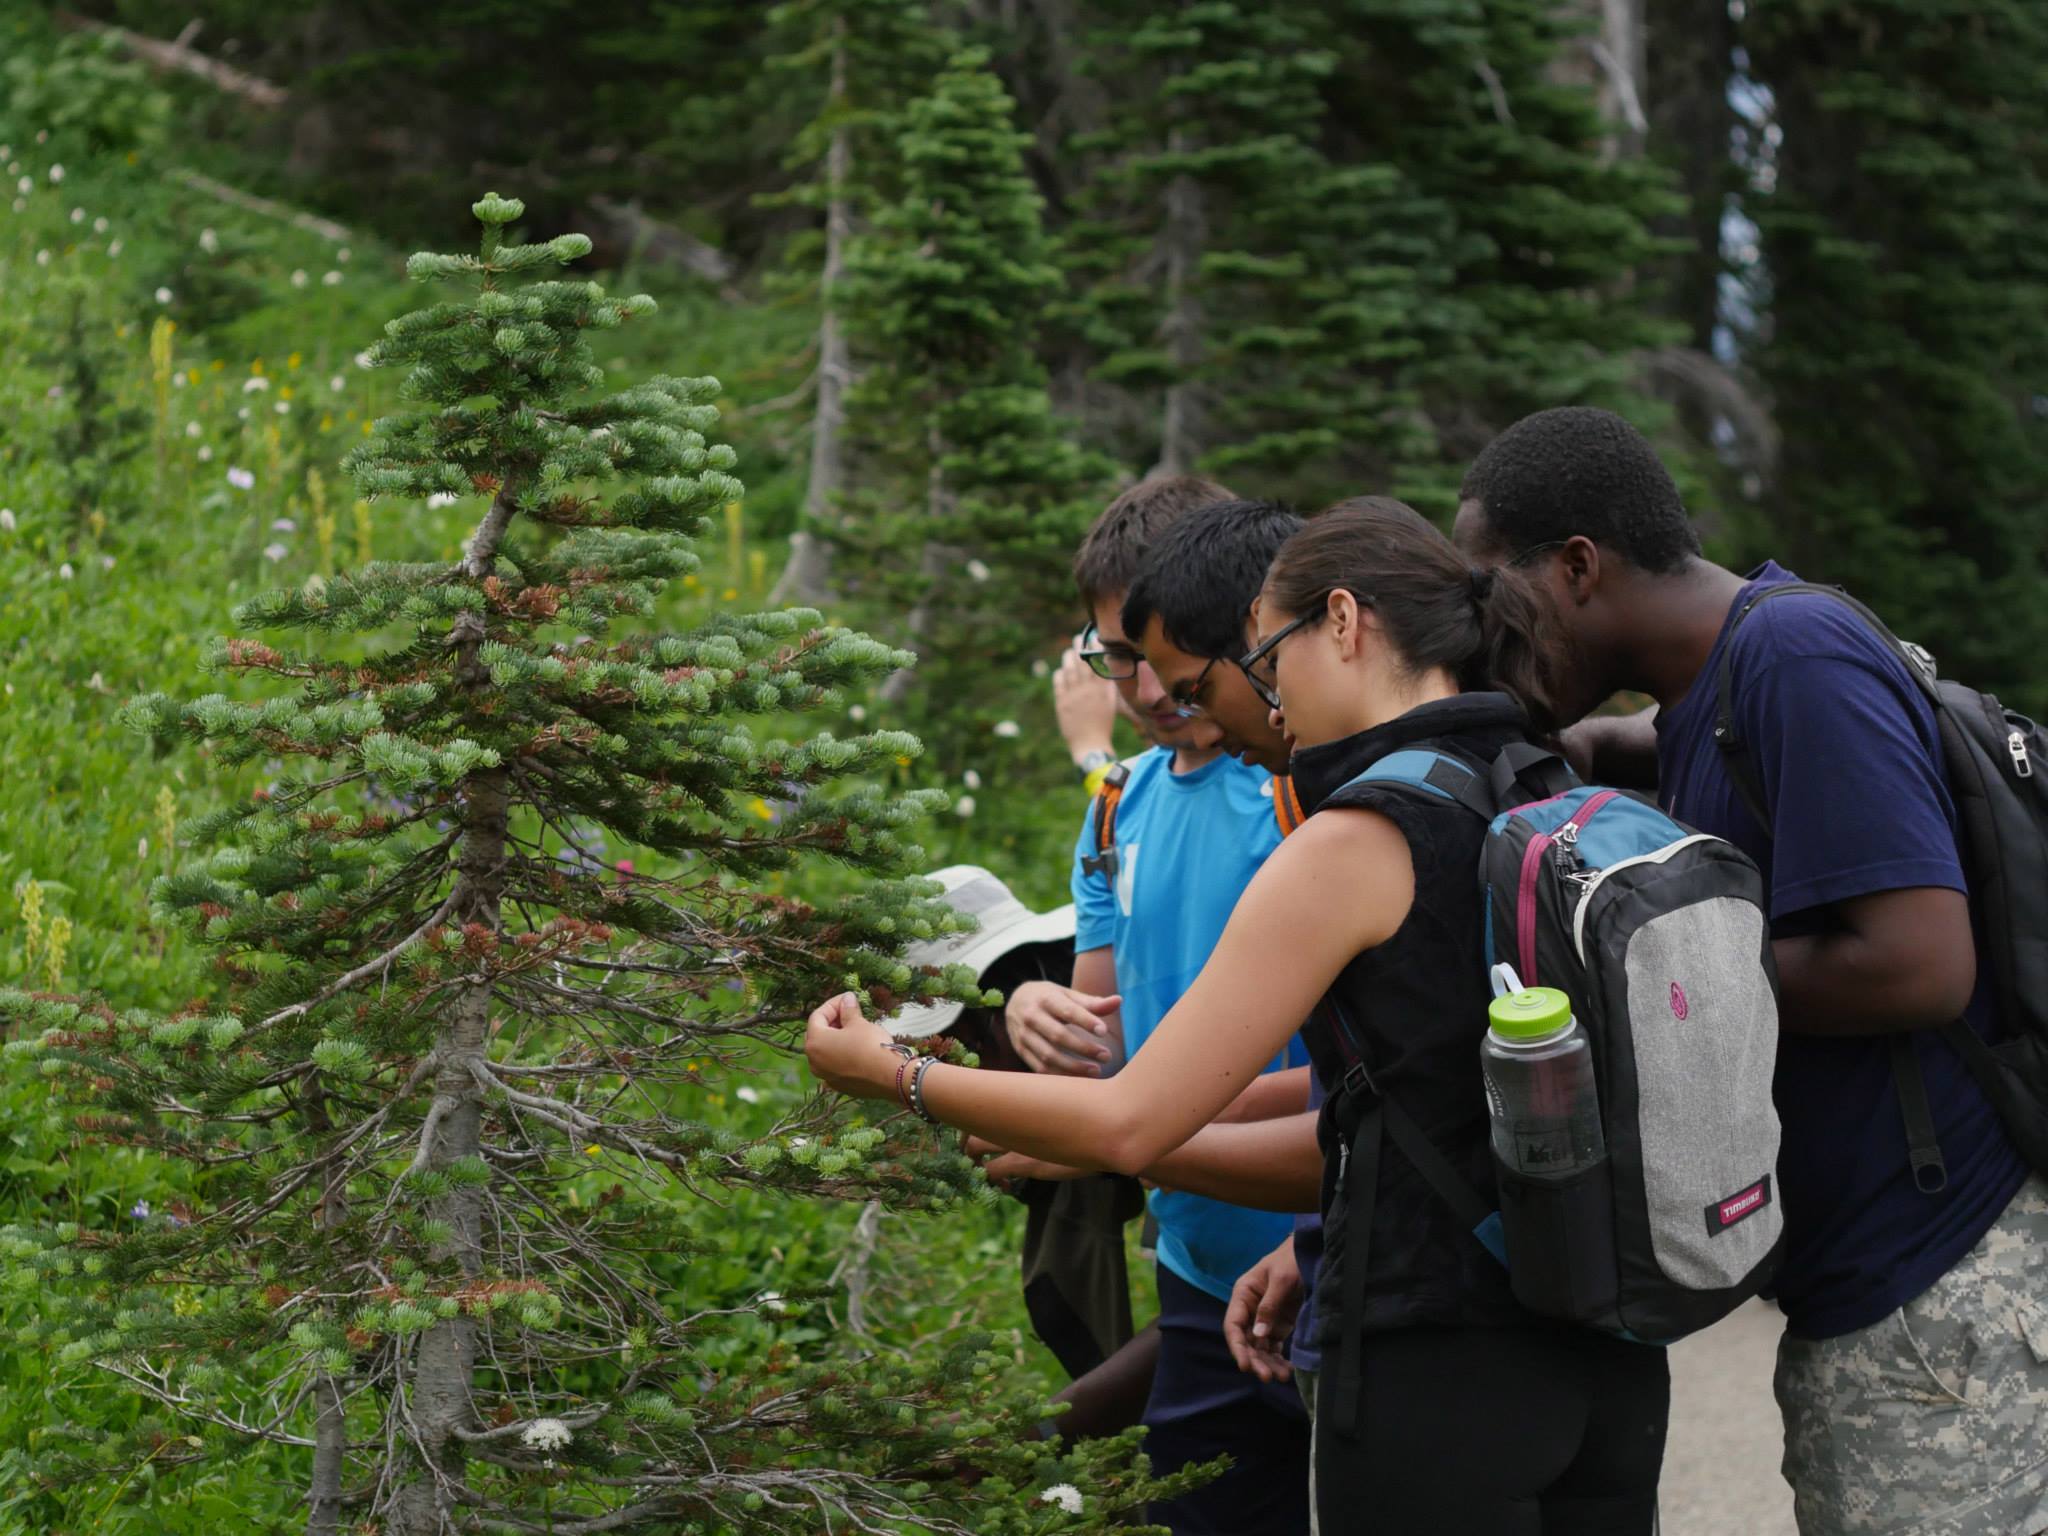 Doris Duke Conservation Scholars at UW are helping define how diverse groups shape conservation.